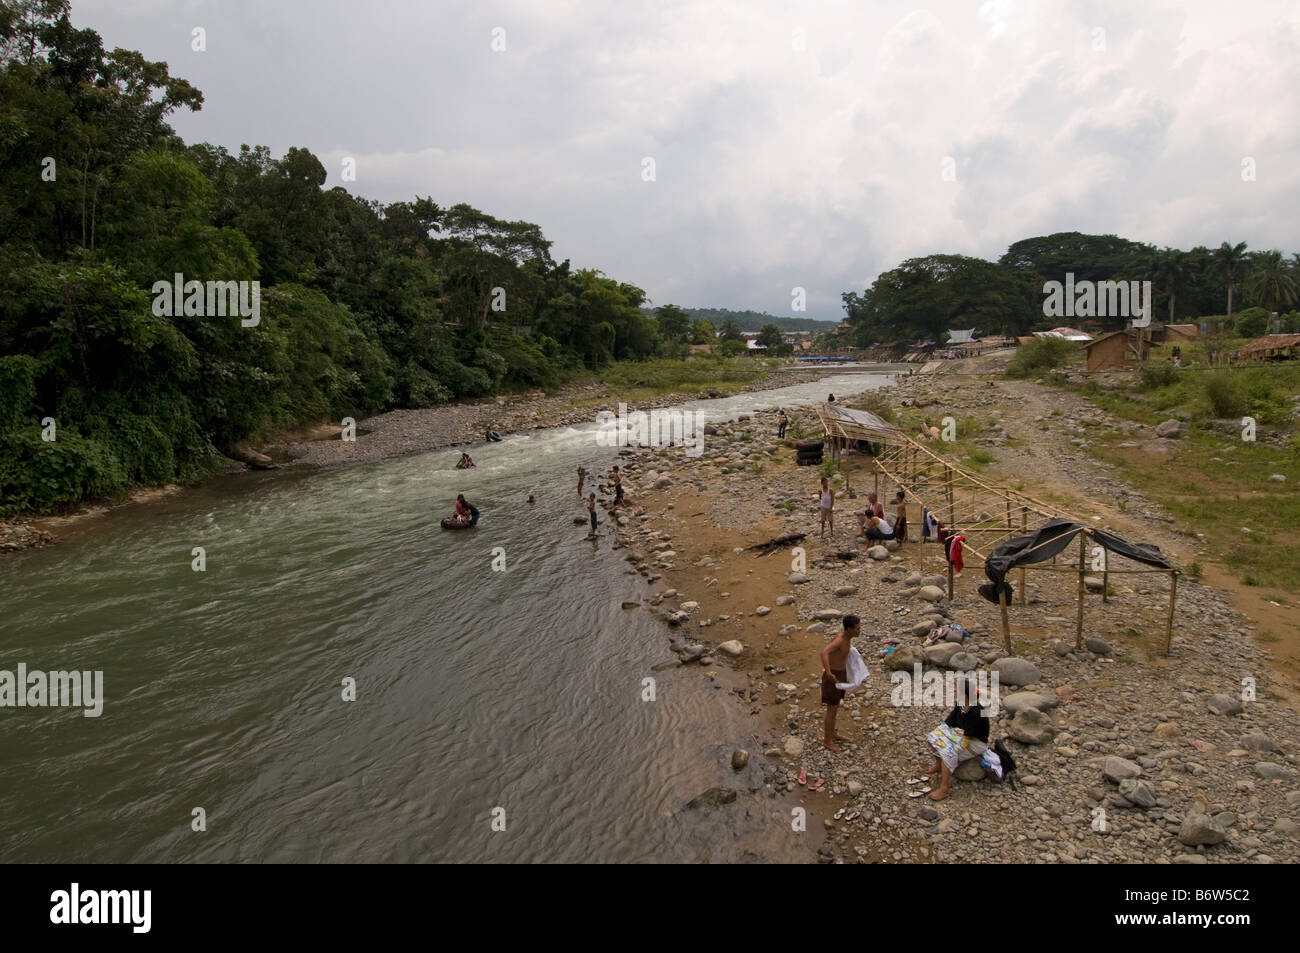 Indonesia people in the river at Bukit Lawang, Sumatra, Indonesia Stock Photo